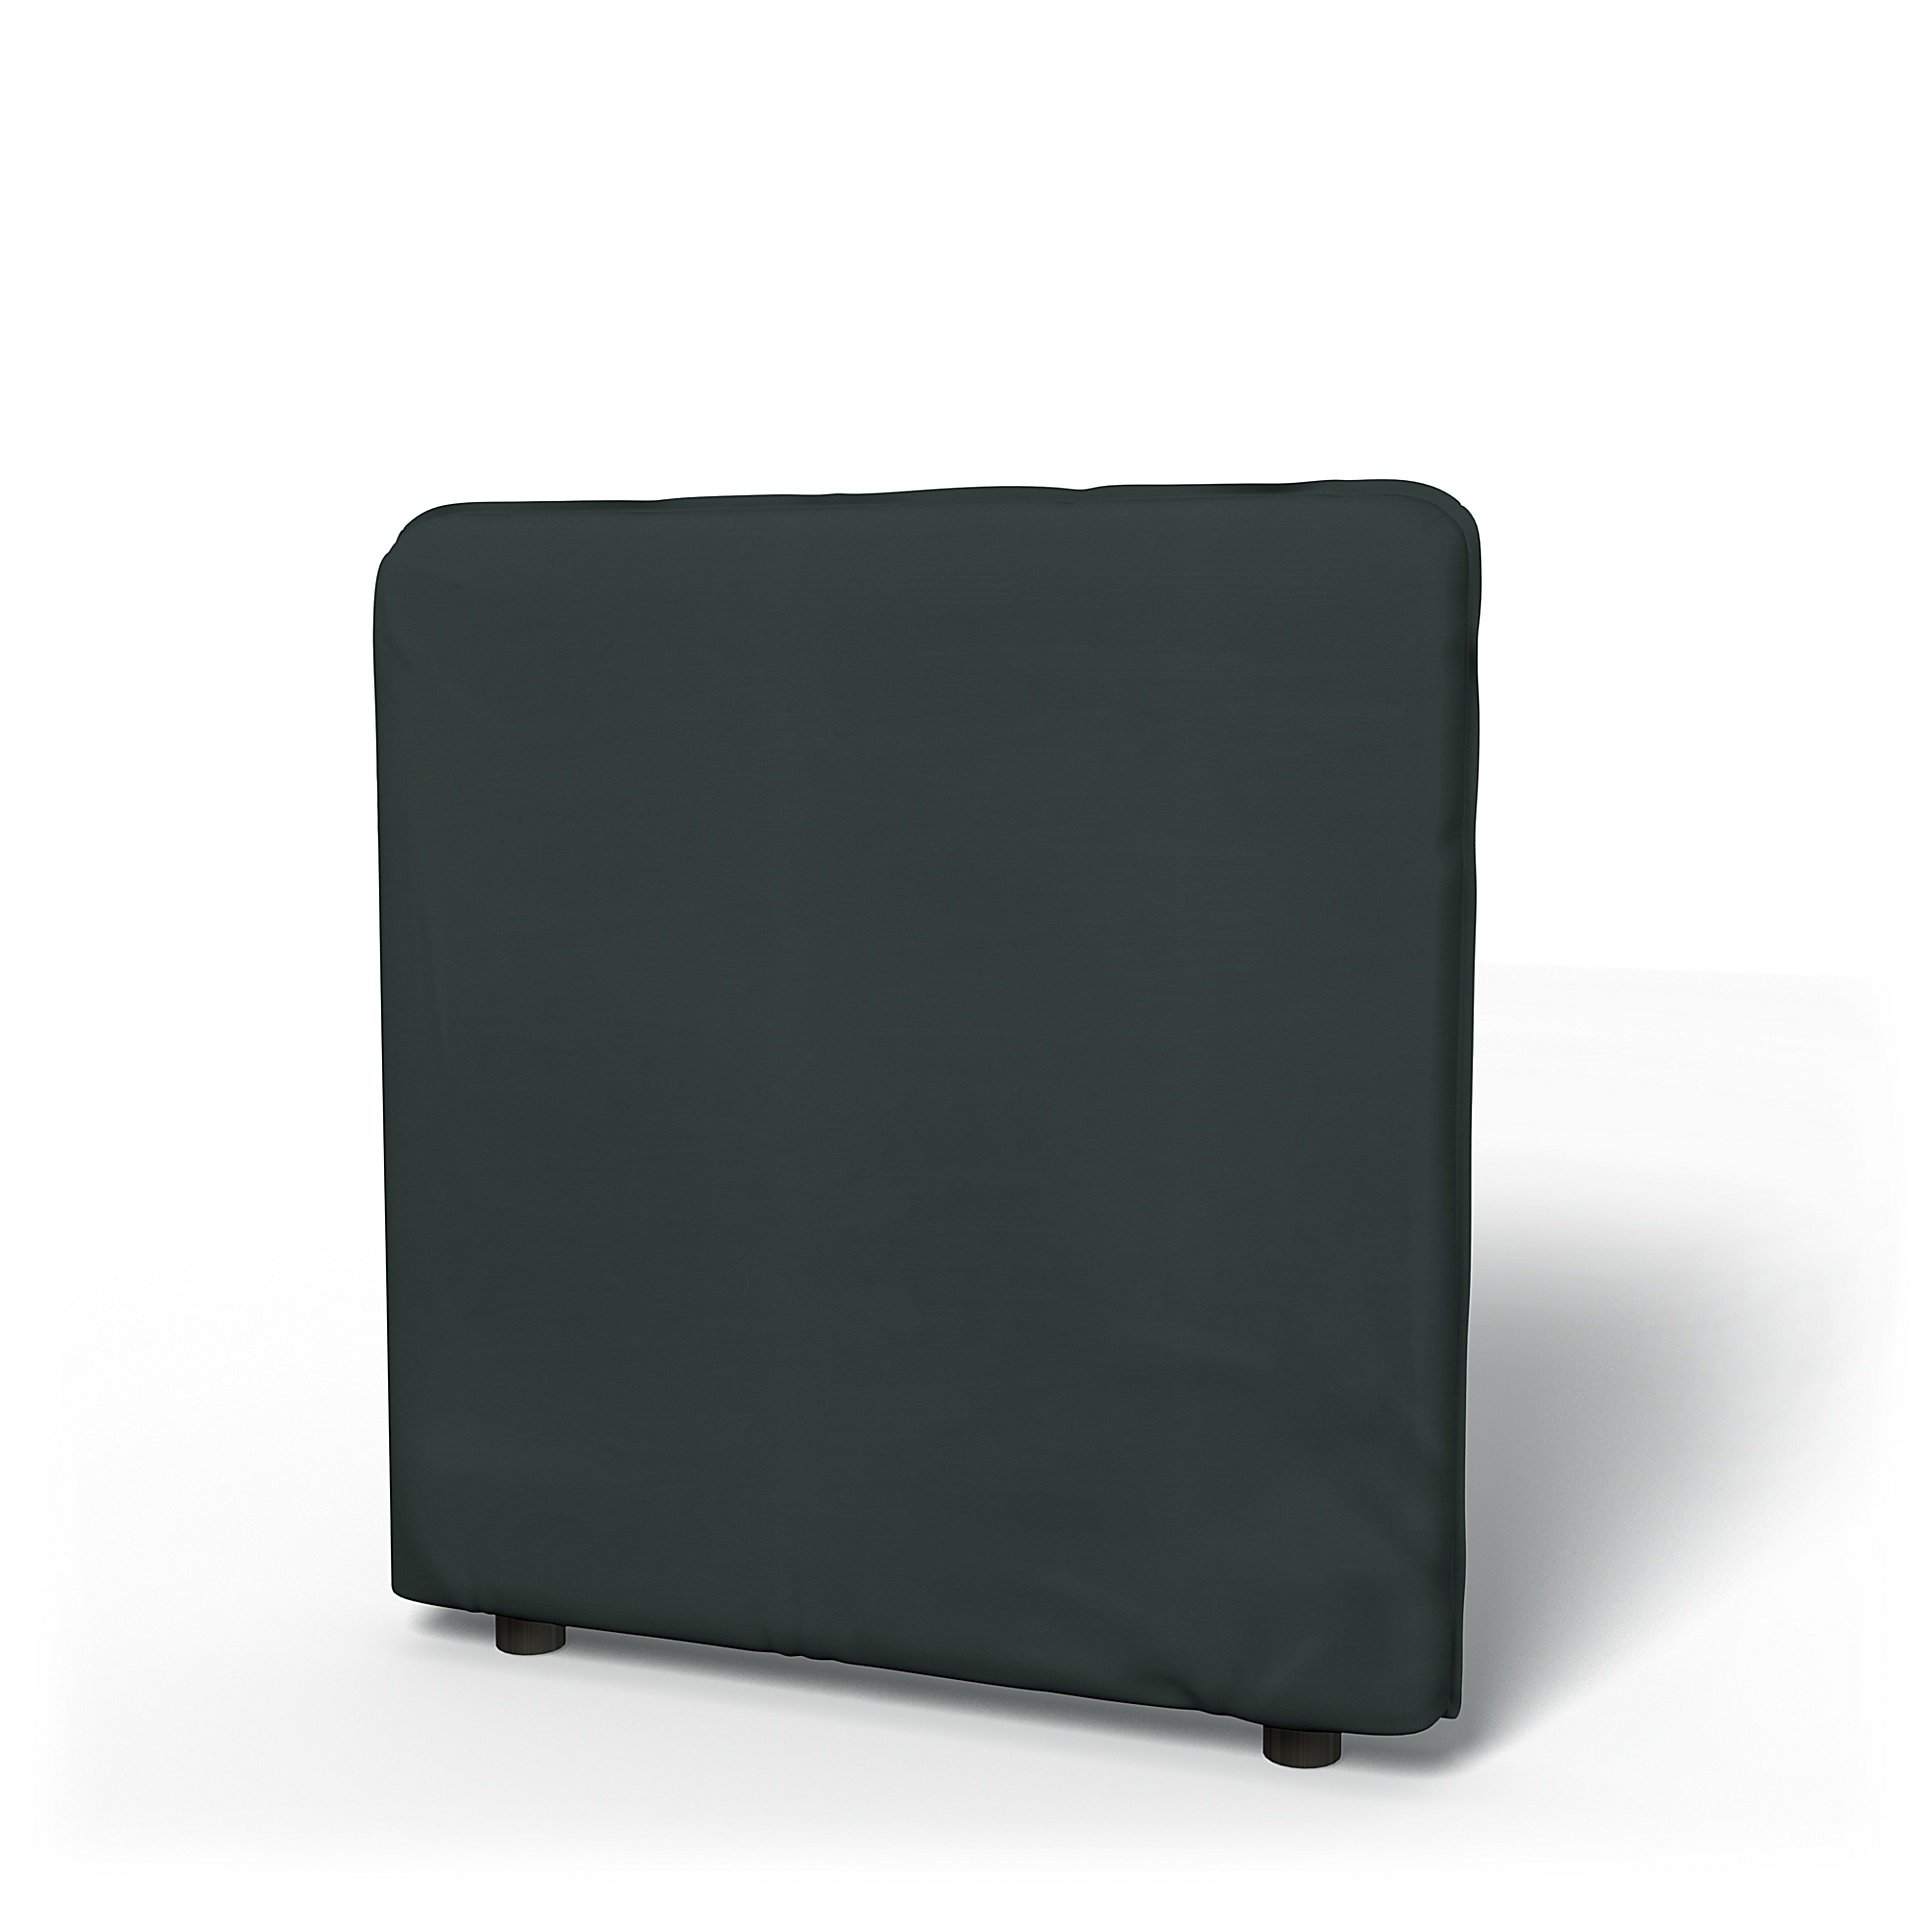 IKEA - Vallentuna Low Backrest Cover 80x80cm 32x32in, Graphite Grey, Cotton - Bemz